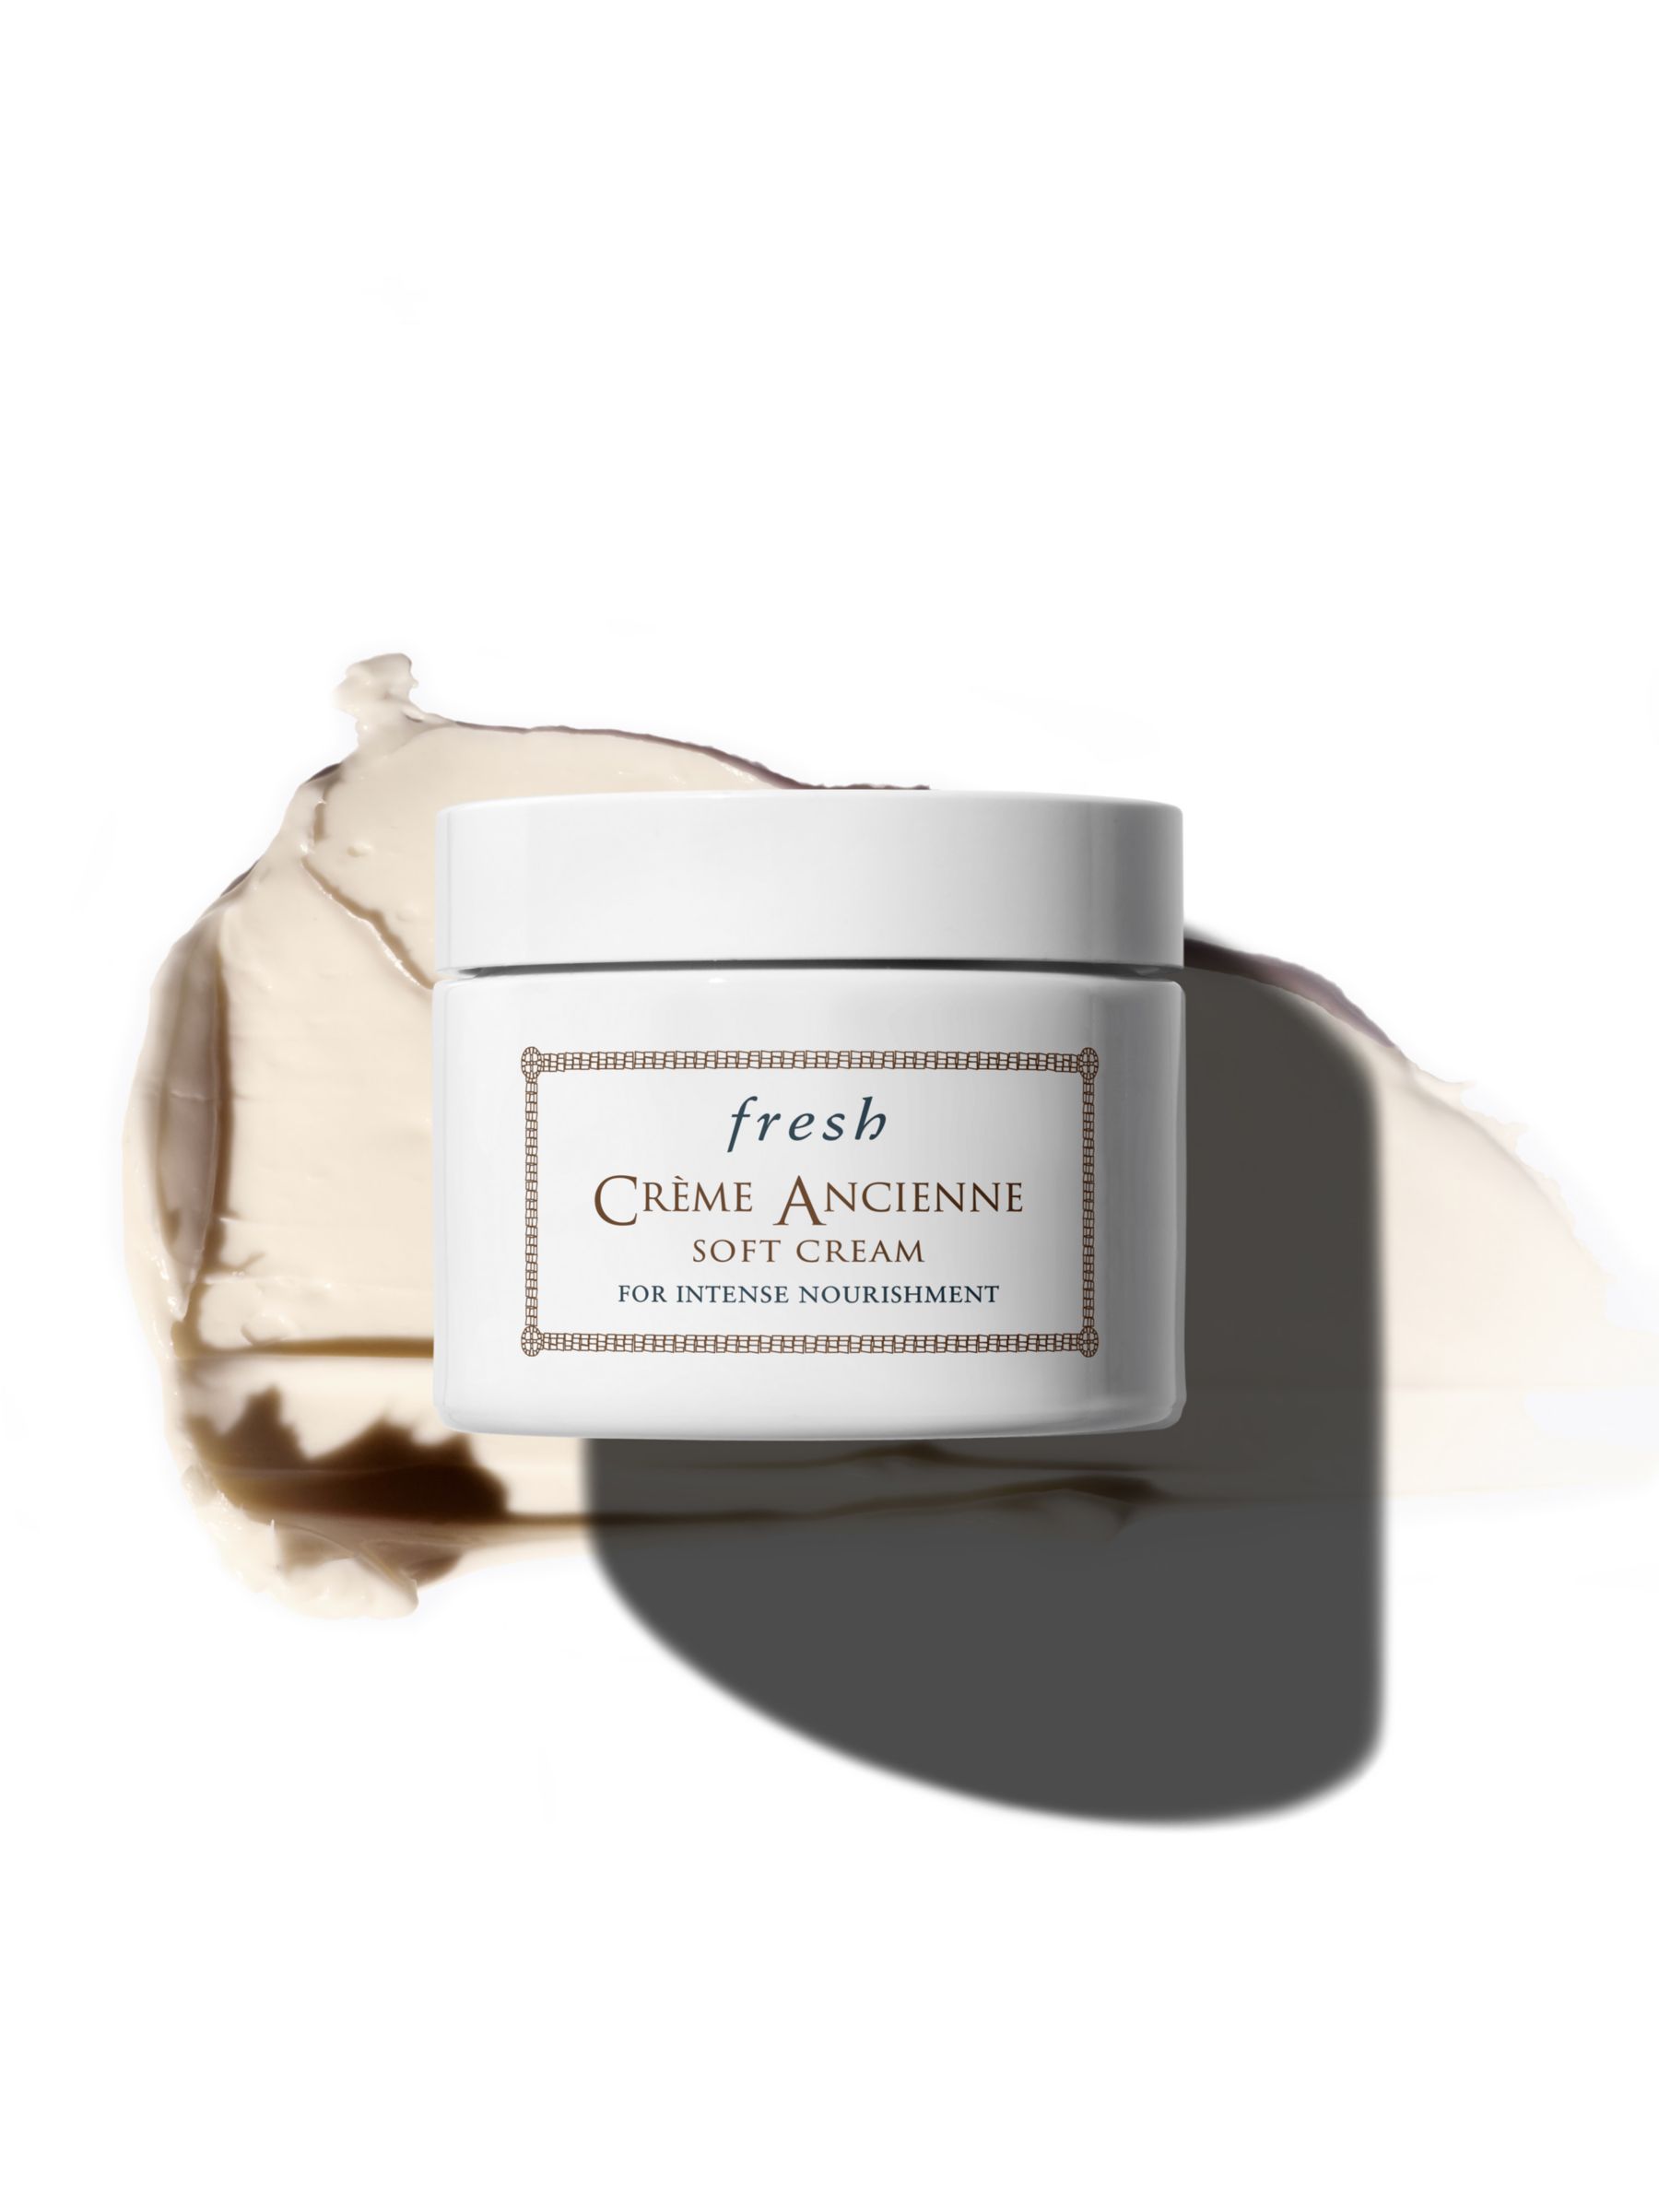 Fresh Crème Ancienne Soft Cream for Intense Nourishment, 30ml 4